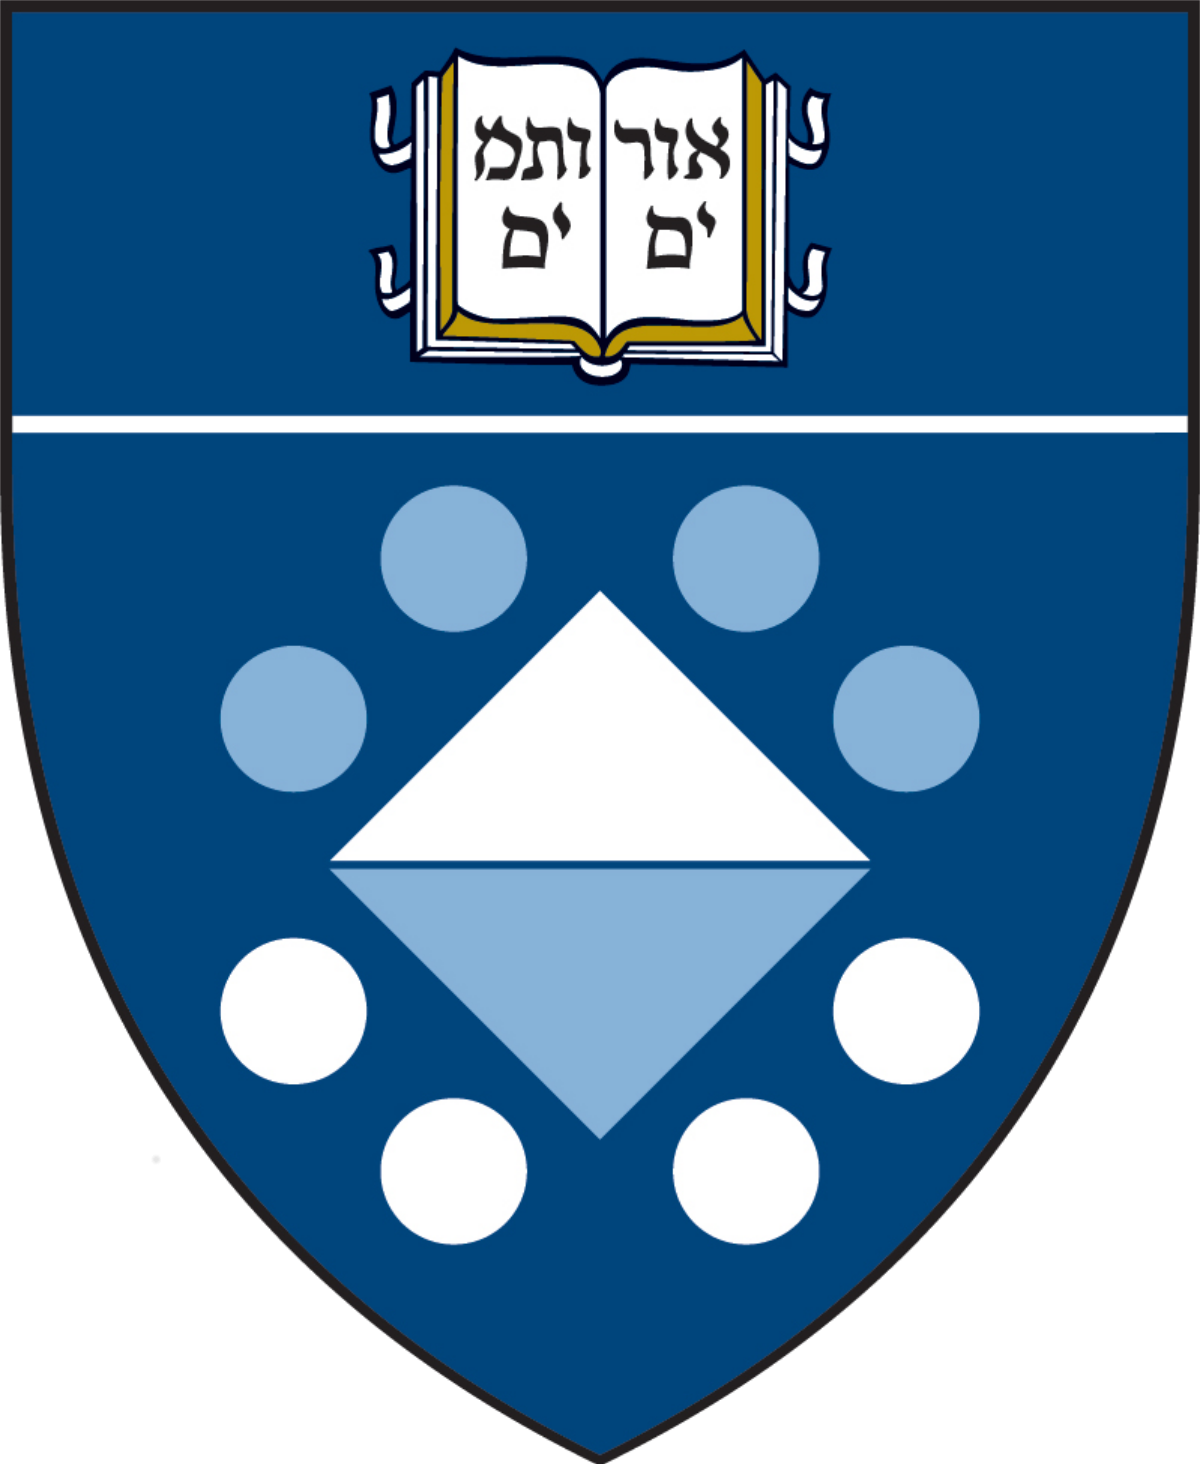 Yale School of Management logo